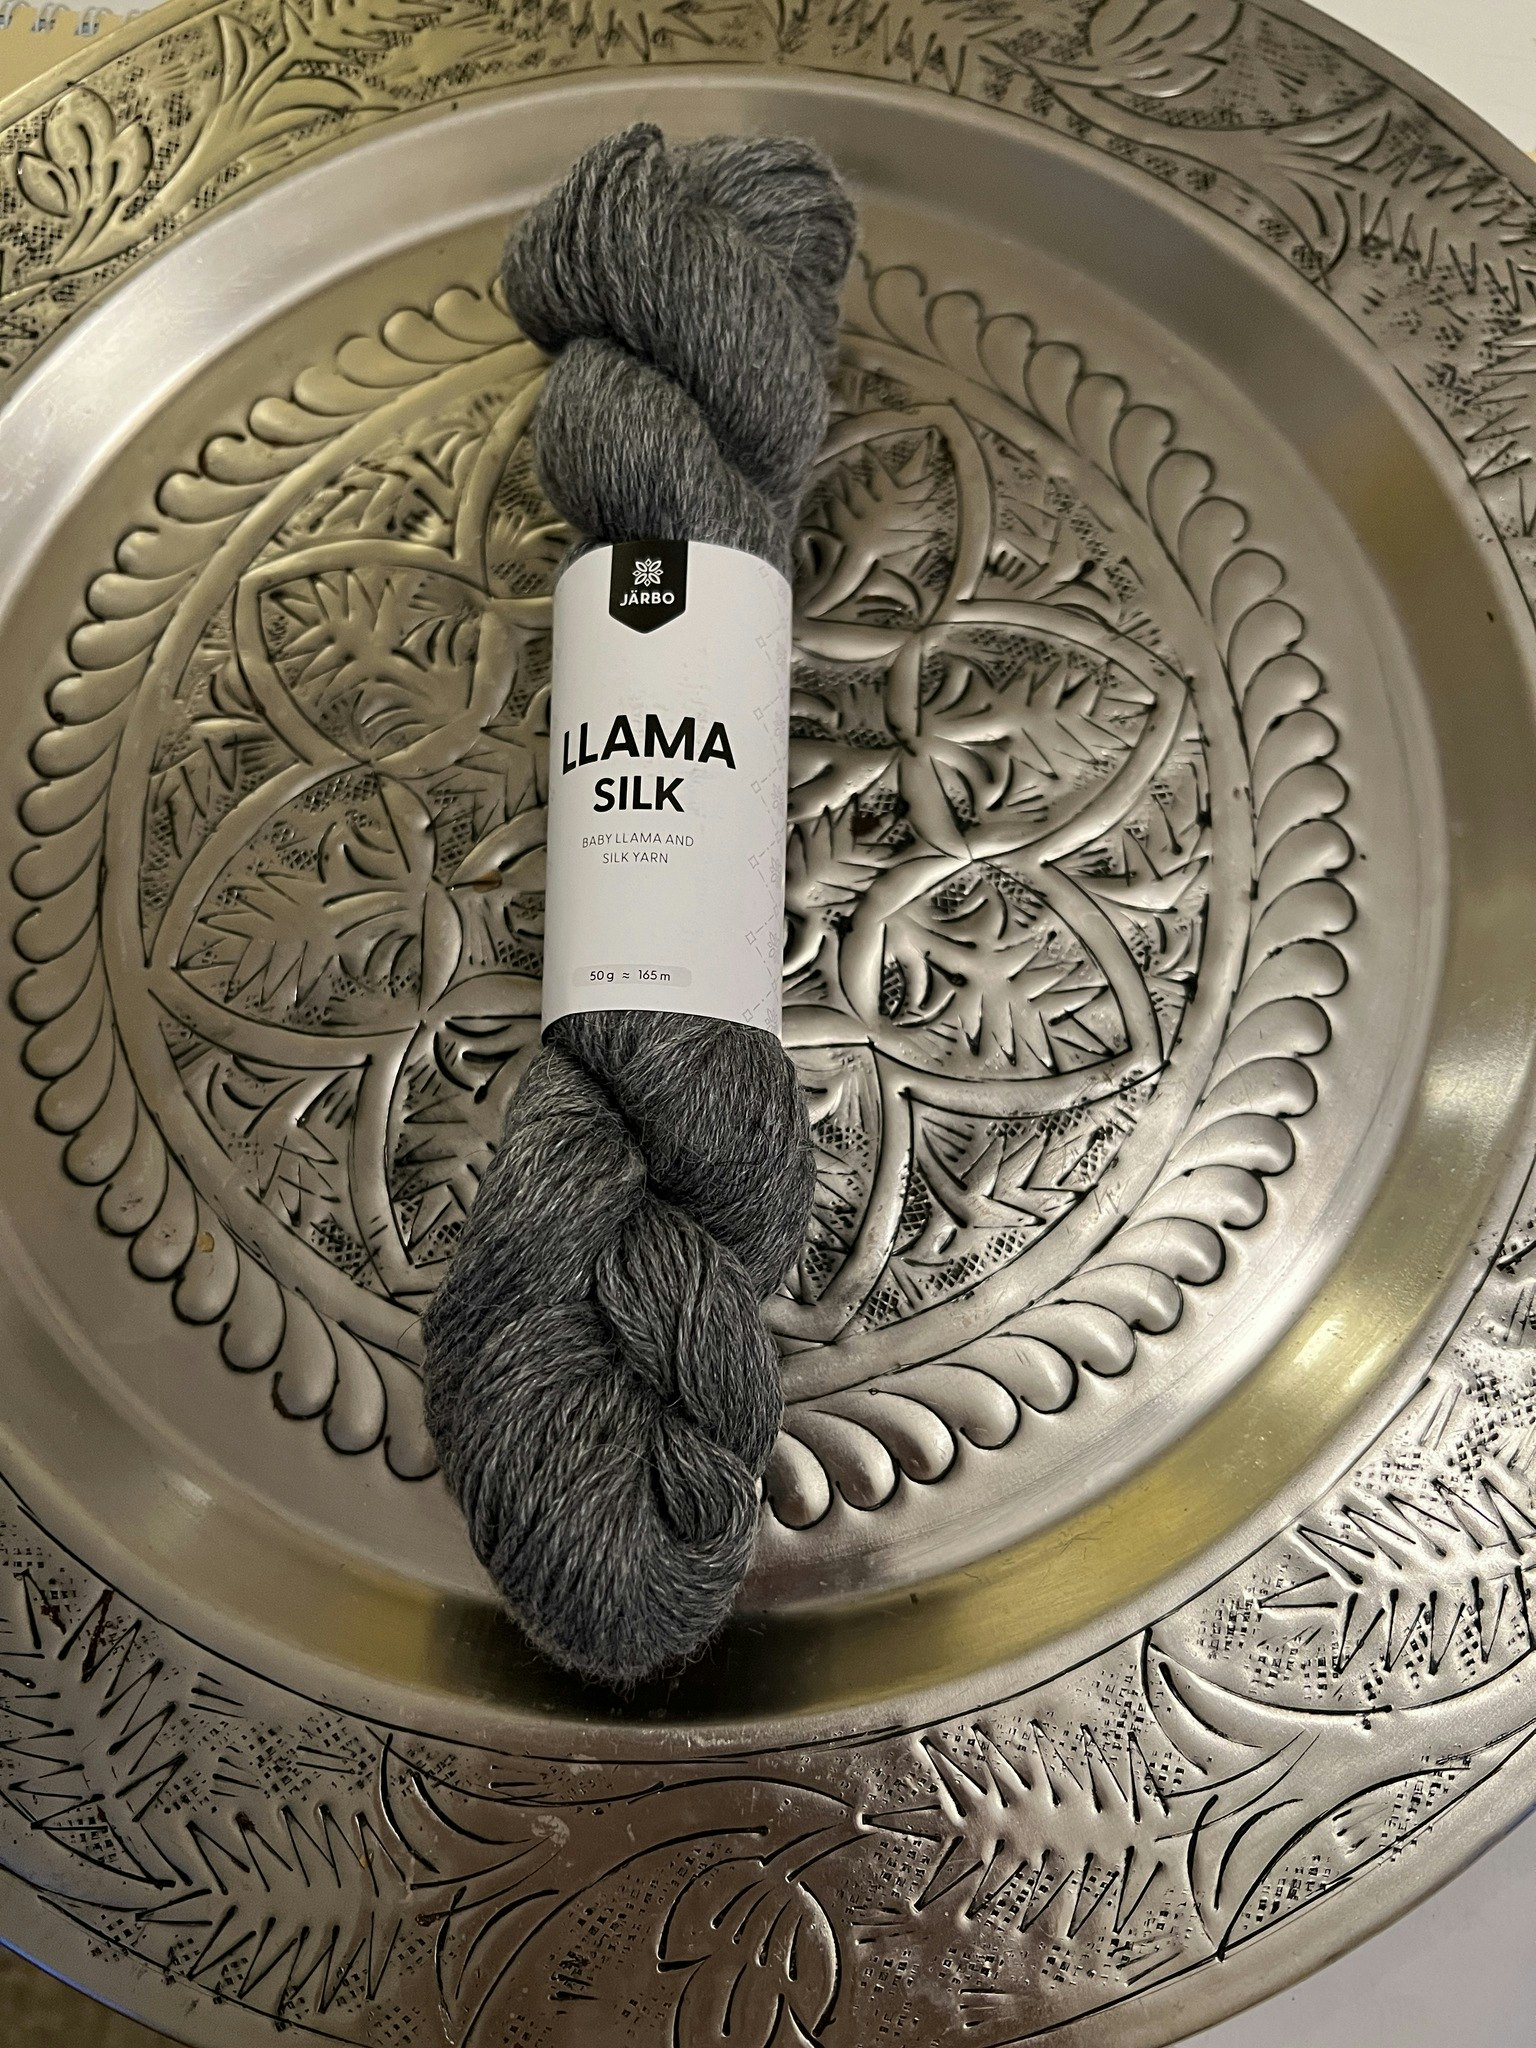 Llama silk